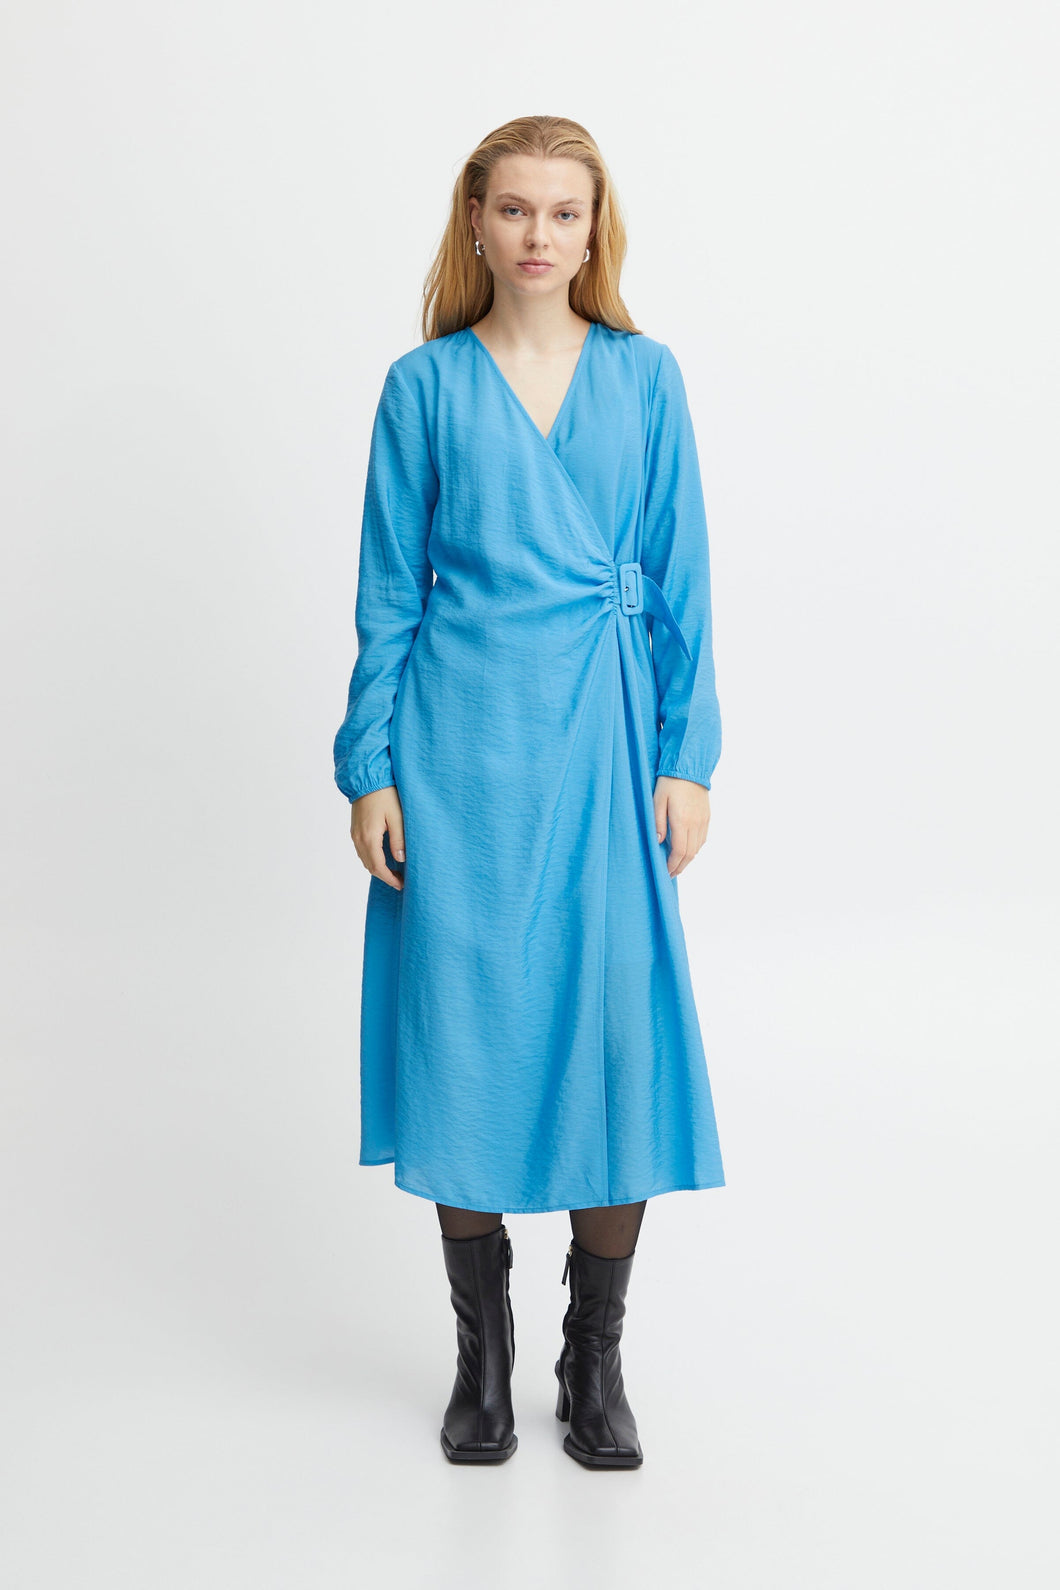 Tavato Dress in Blithe Blue Dress Ichi 